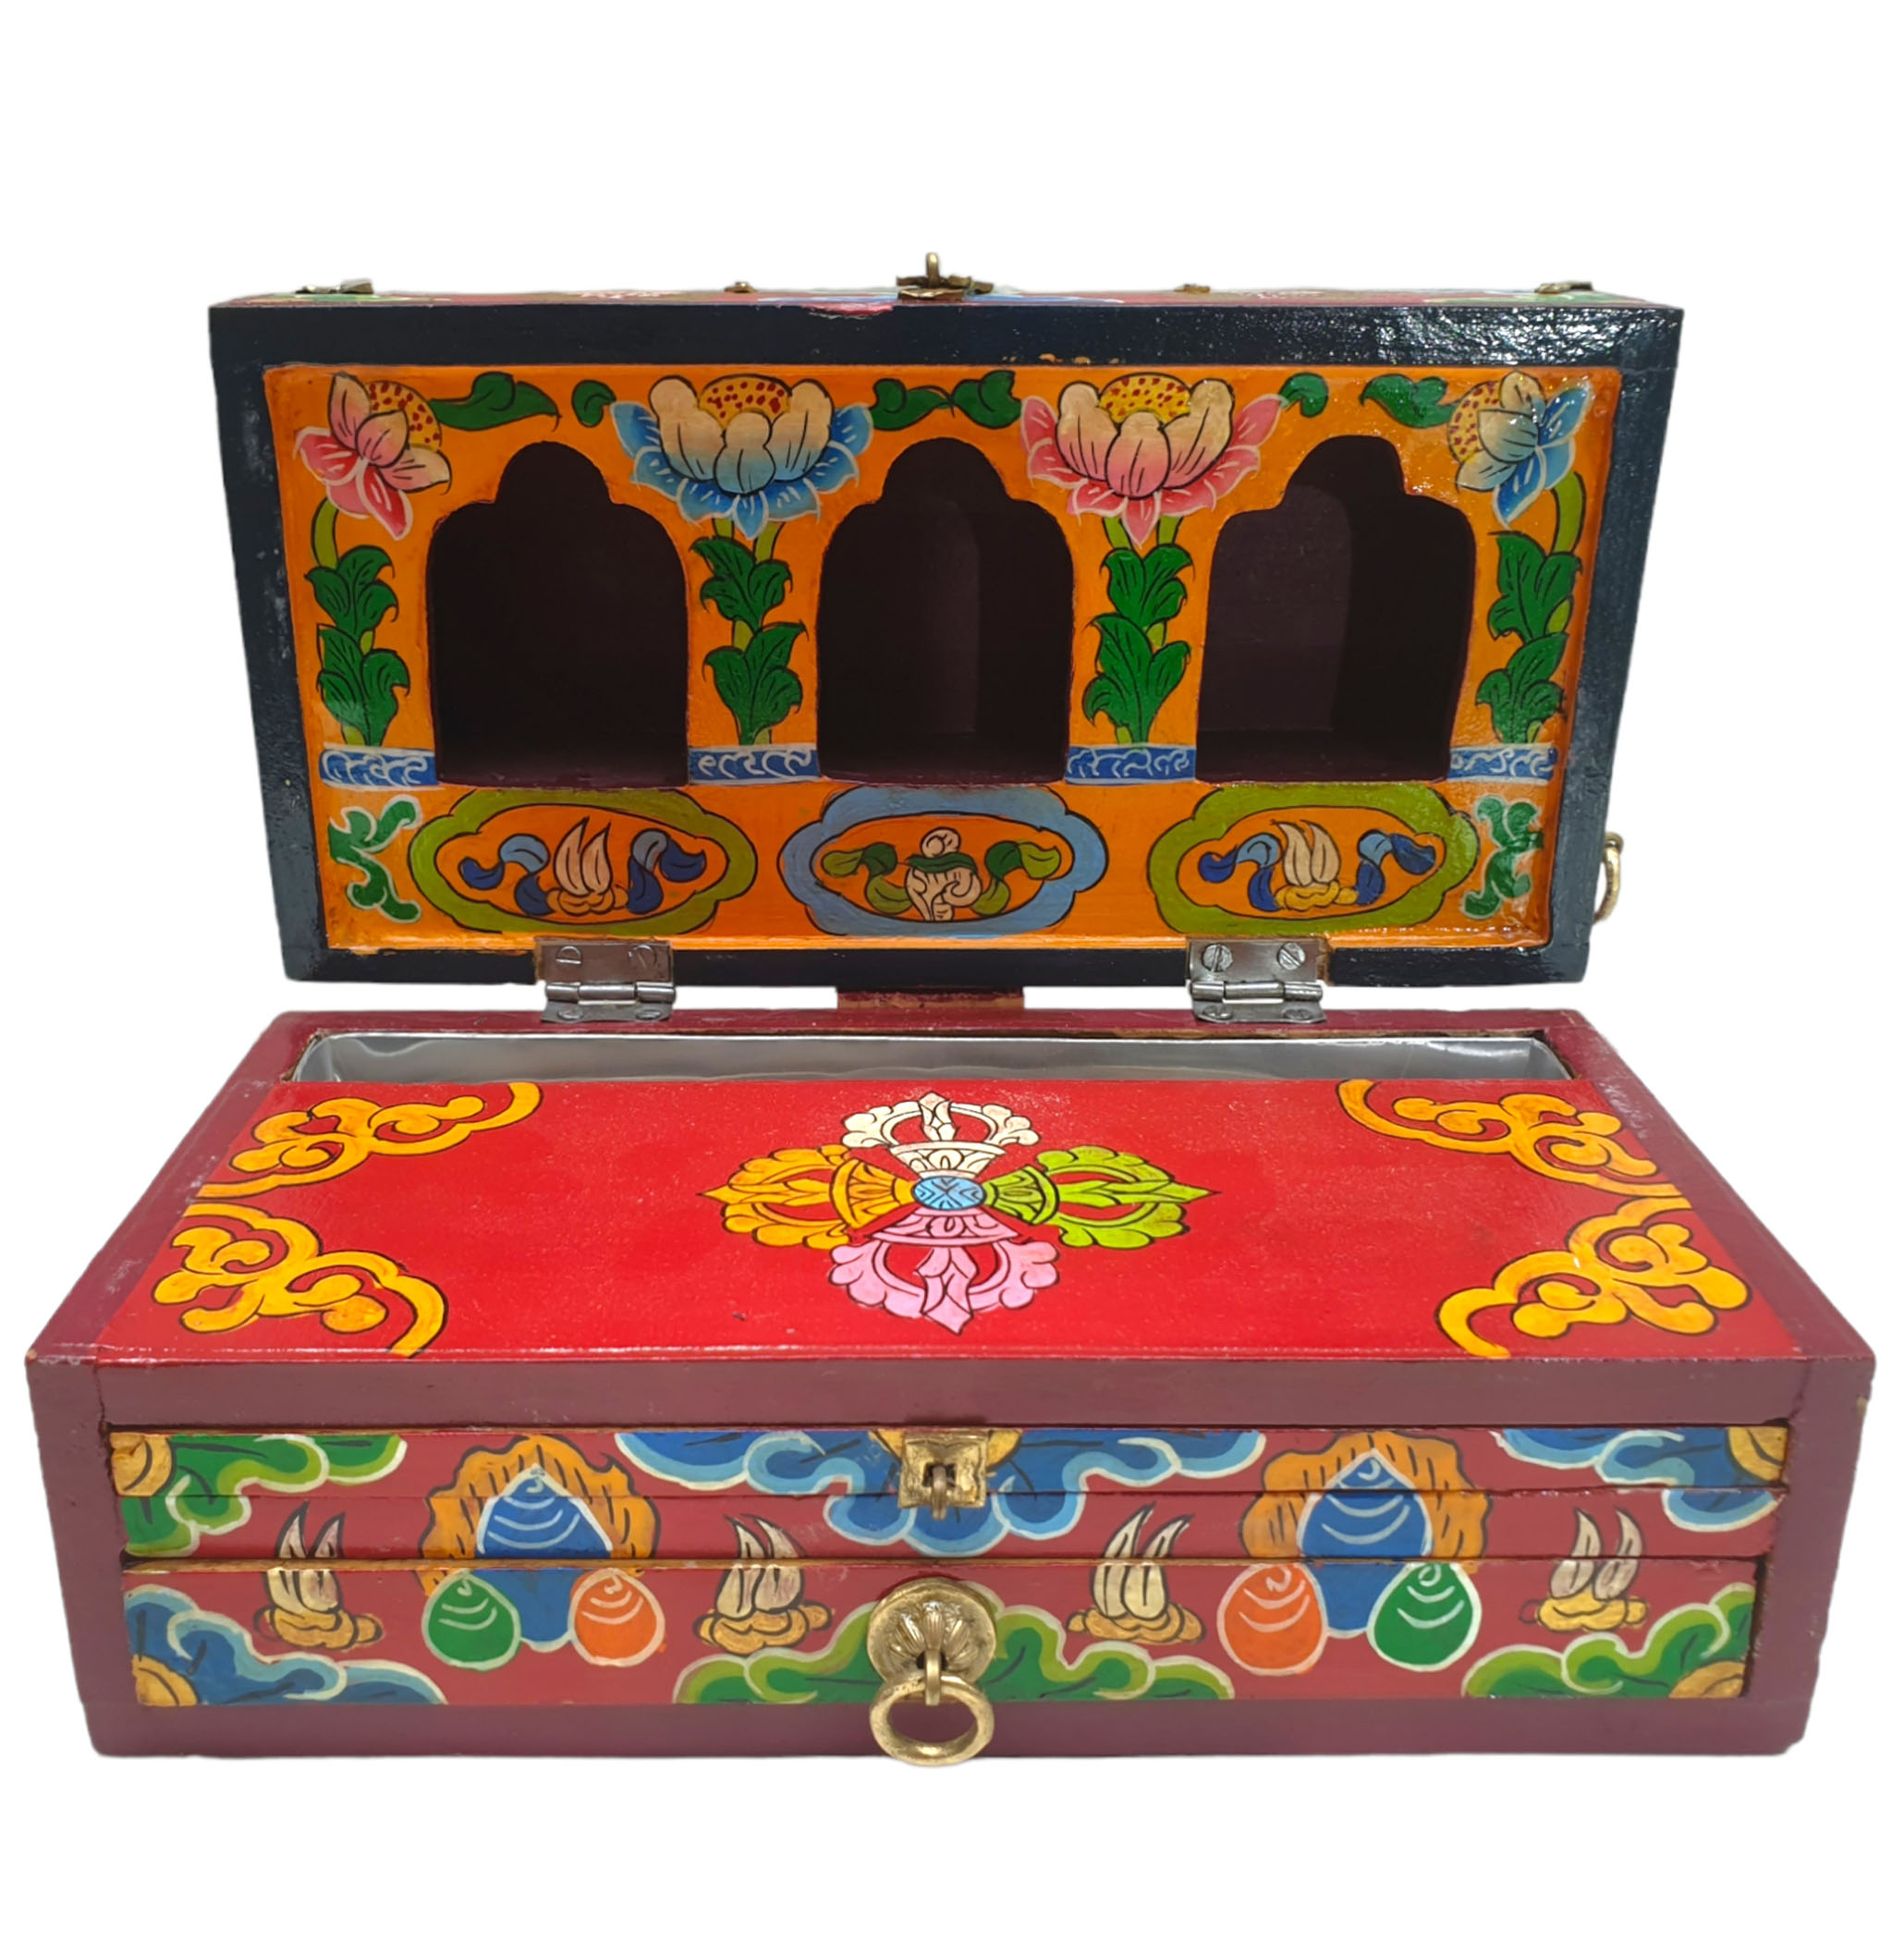 Buddhist Handmade Wooden Traveling Altar chesum Box, foldable, With Chenrezig And White And Green Tara